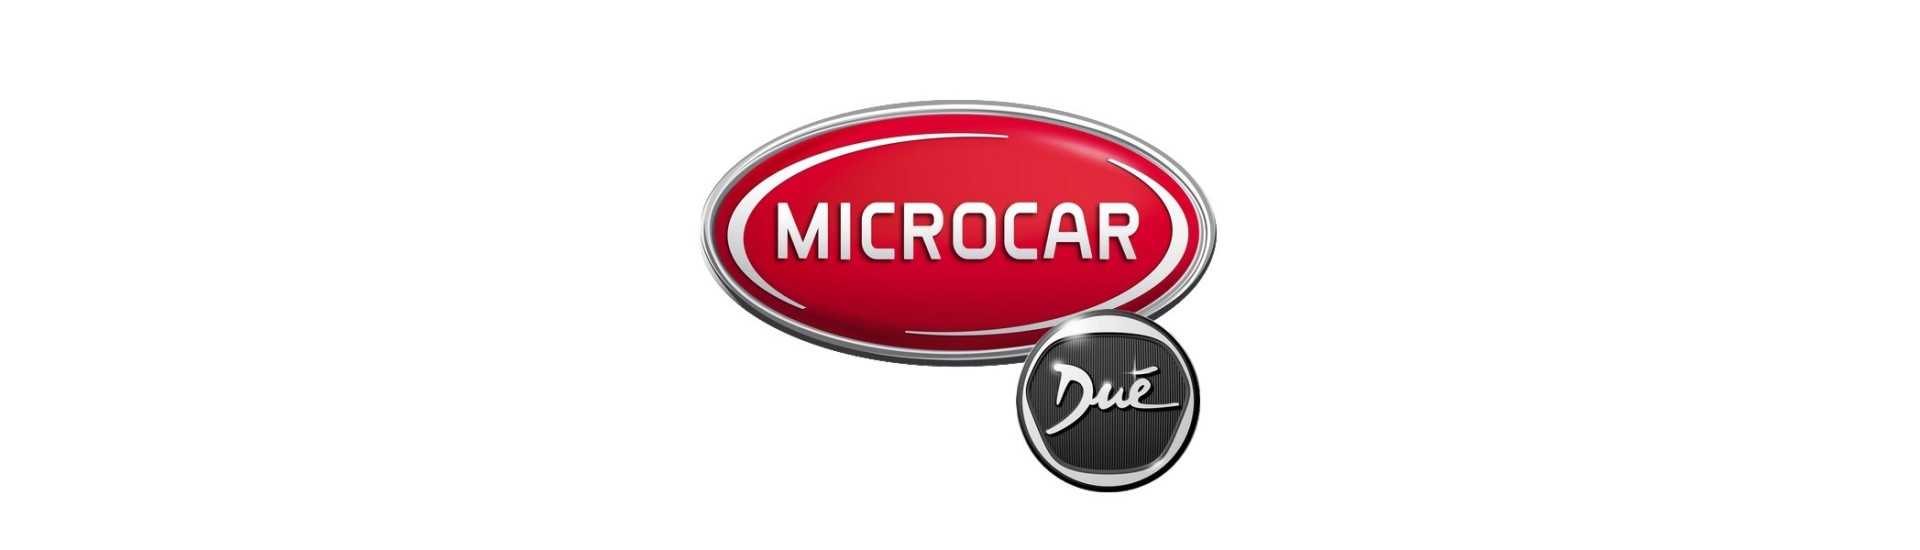 Parhaan auton hinta ilman lupaa Microcar Dué